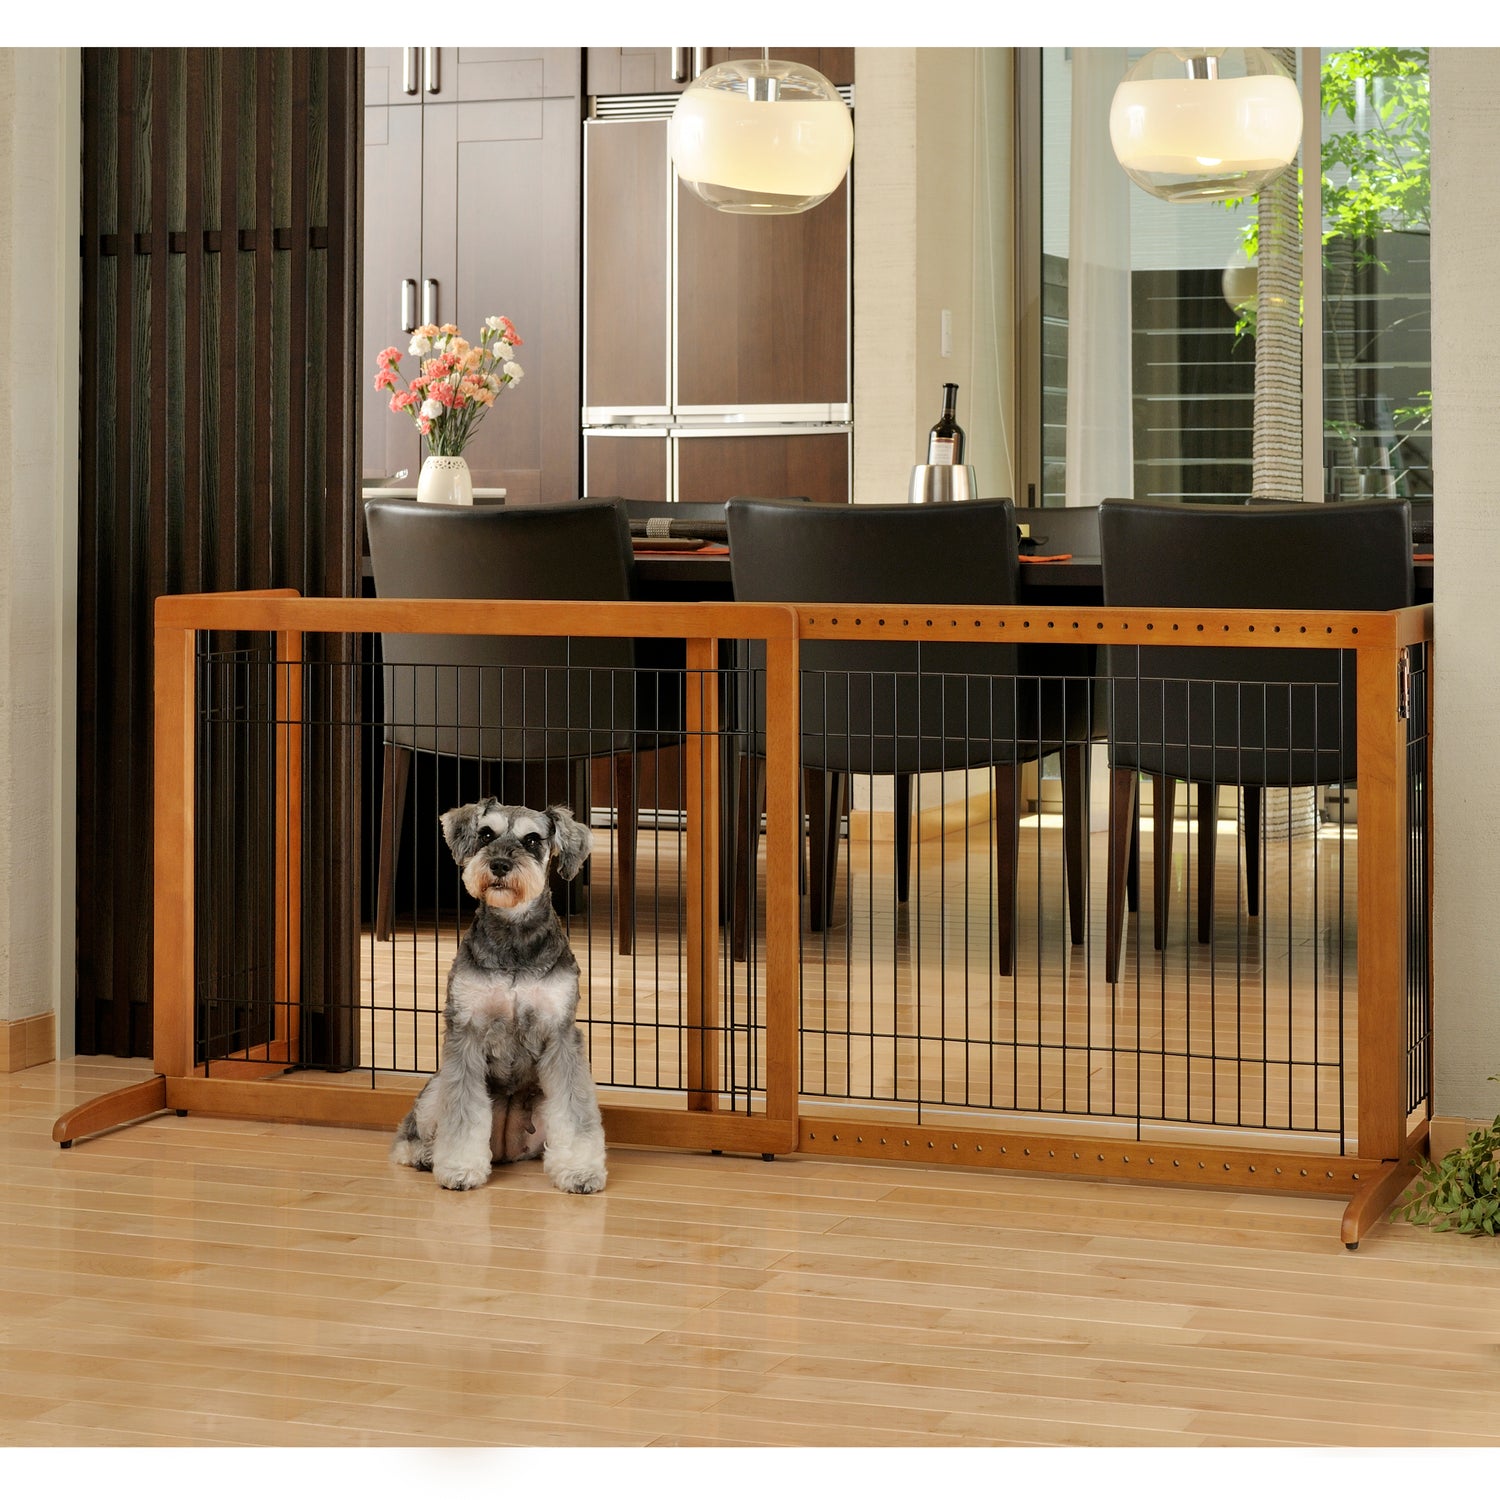 hardwood luxury stand alone freestanding dog gate